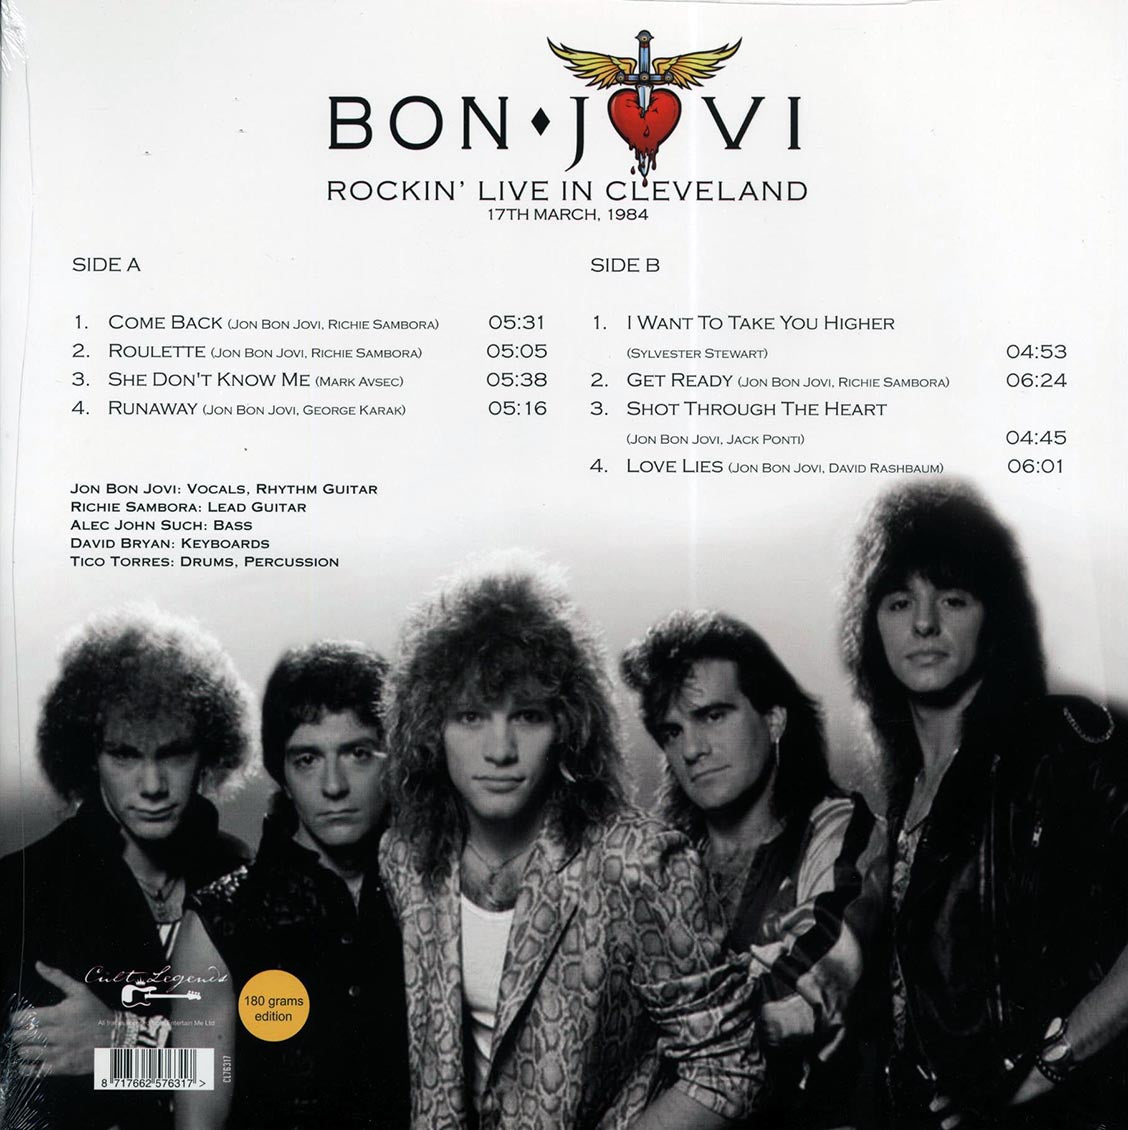 Bon Jovi - Rockin' Live In Cleveland, 17th March, 1984 - Vinyl LP, LP